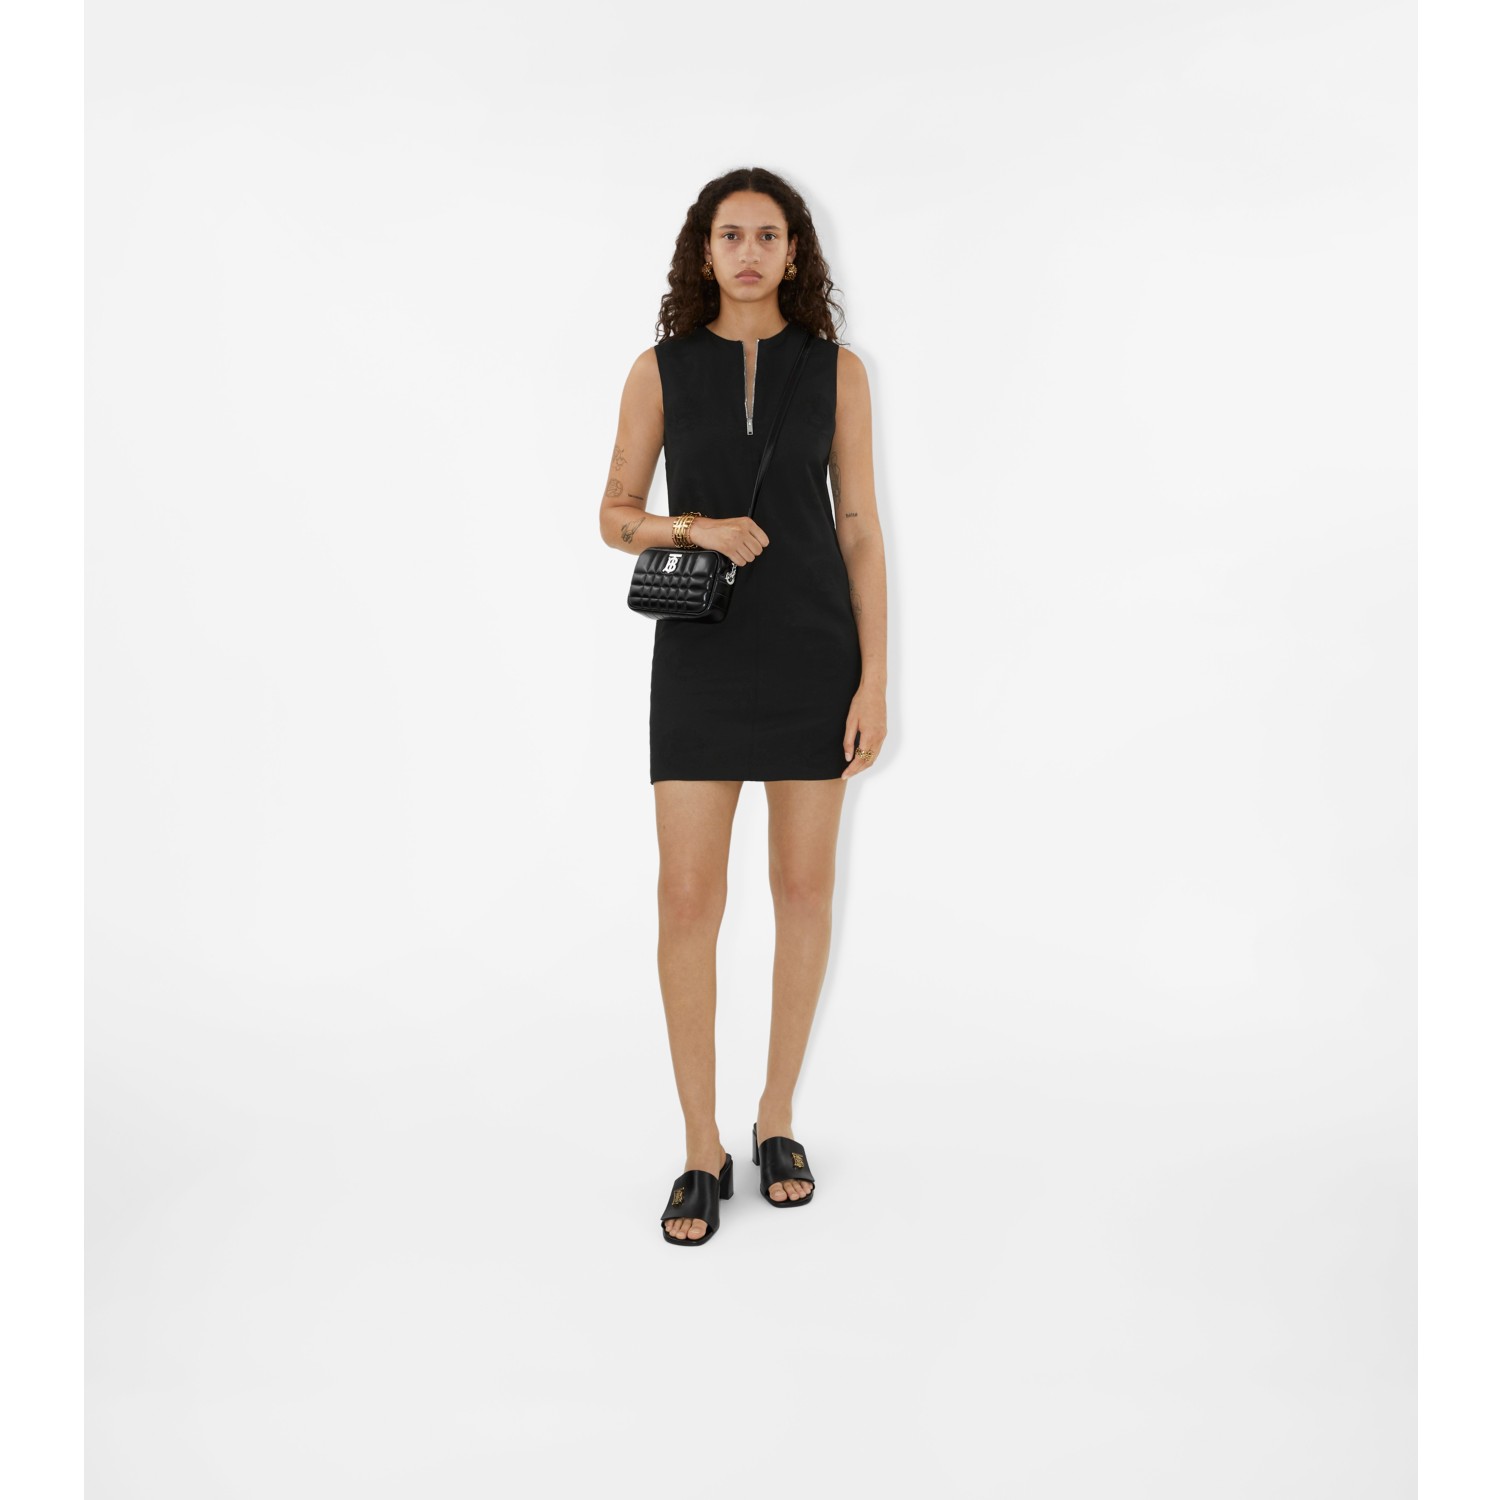 Mini Lola Bag in Black - Women | Burberry® Official